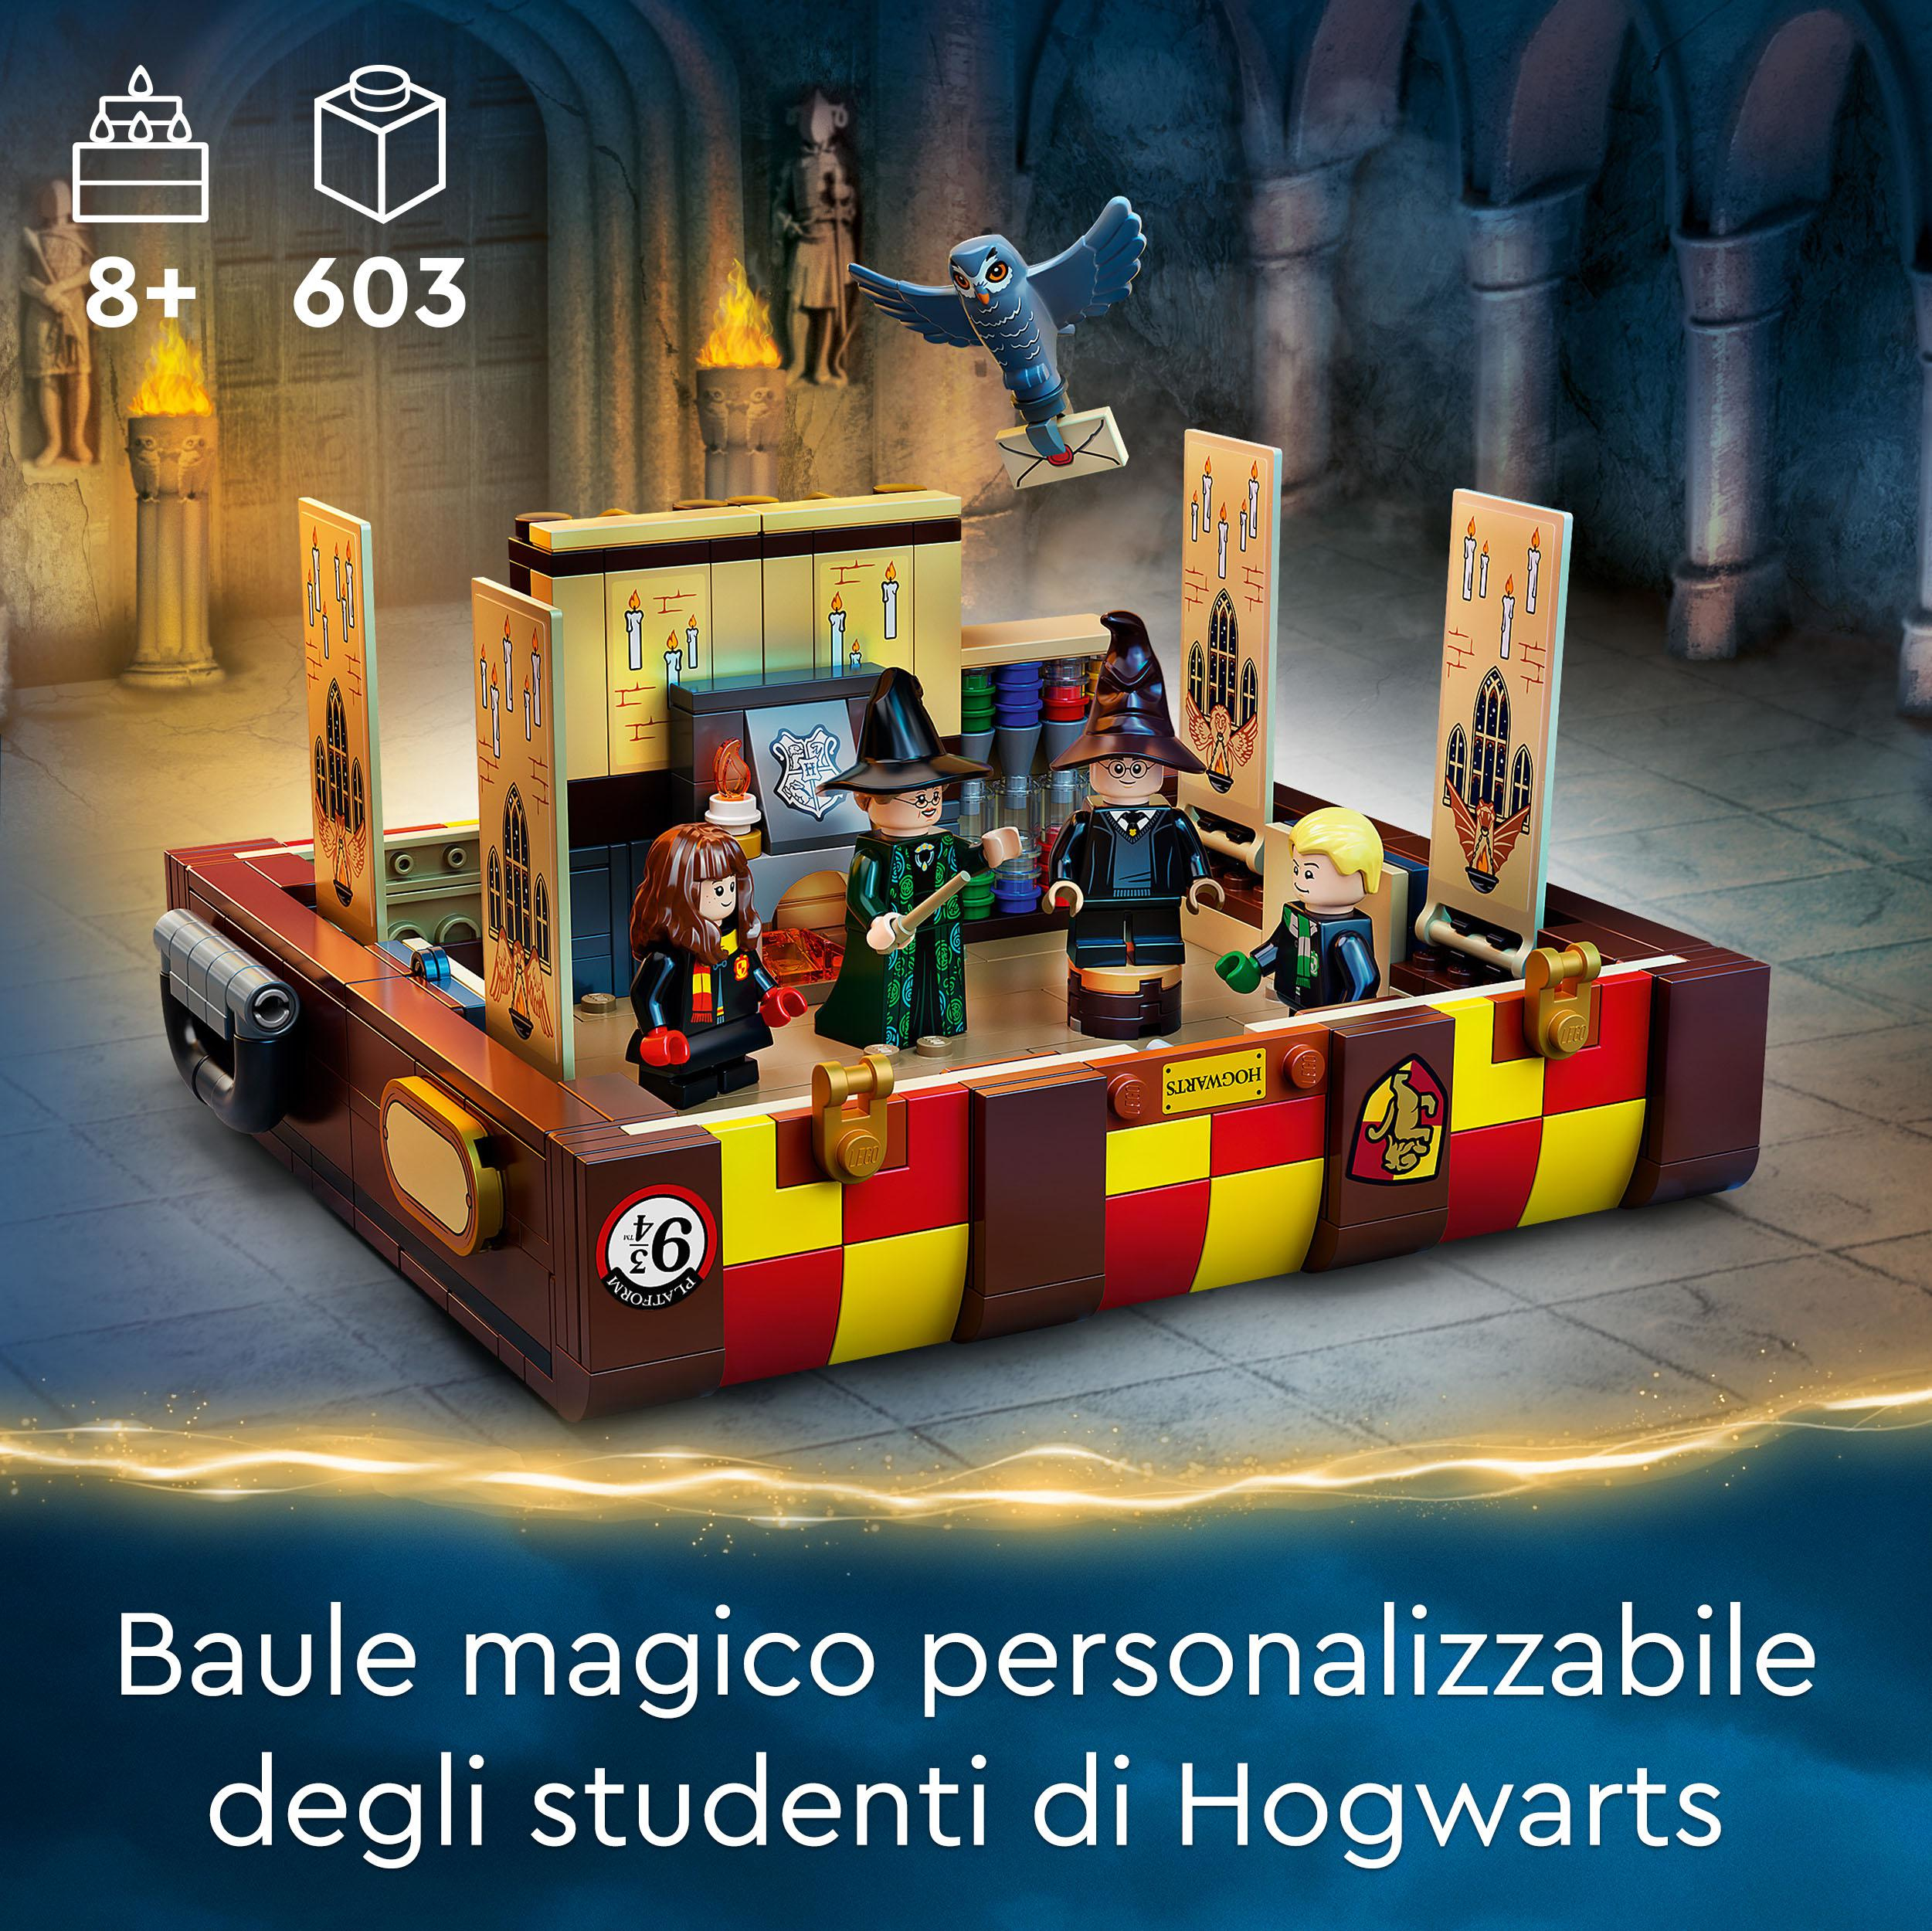 LEGO Harry Potter Il baule magico di Hogwarts [76399]